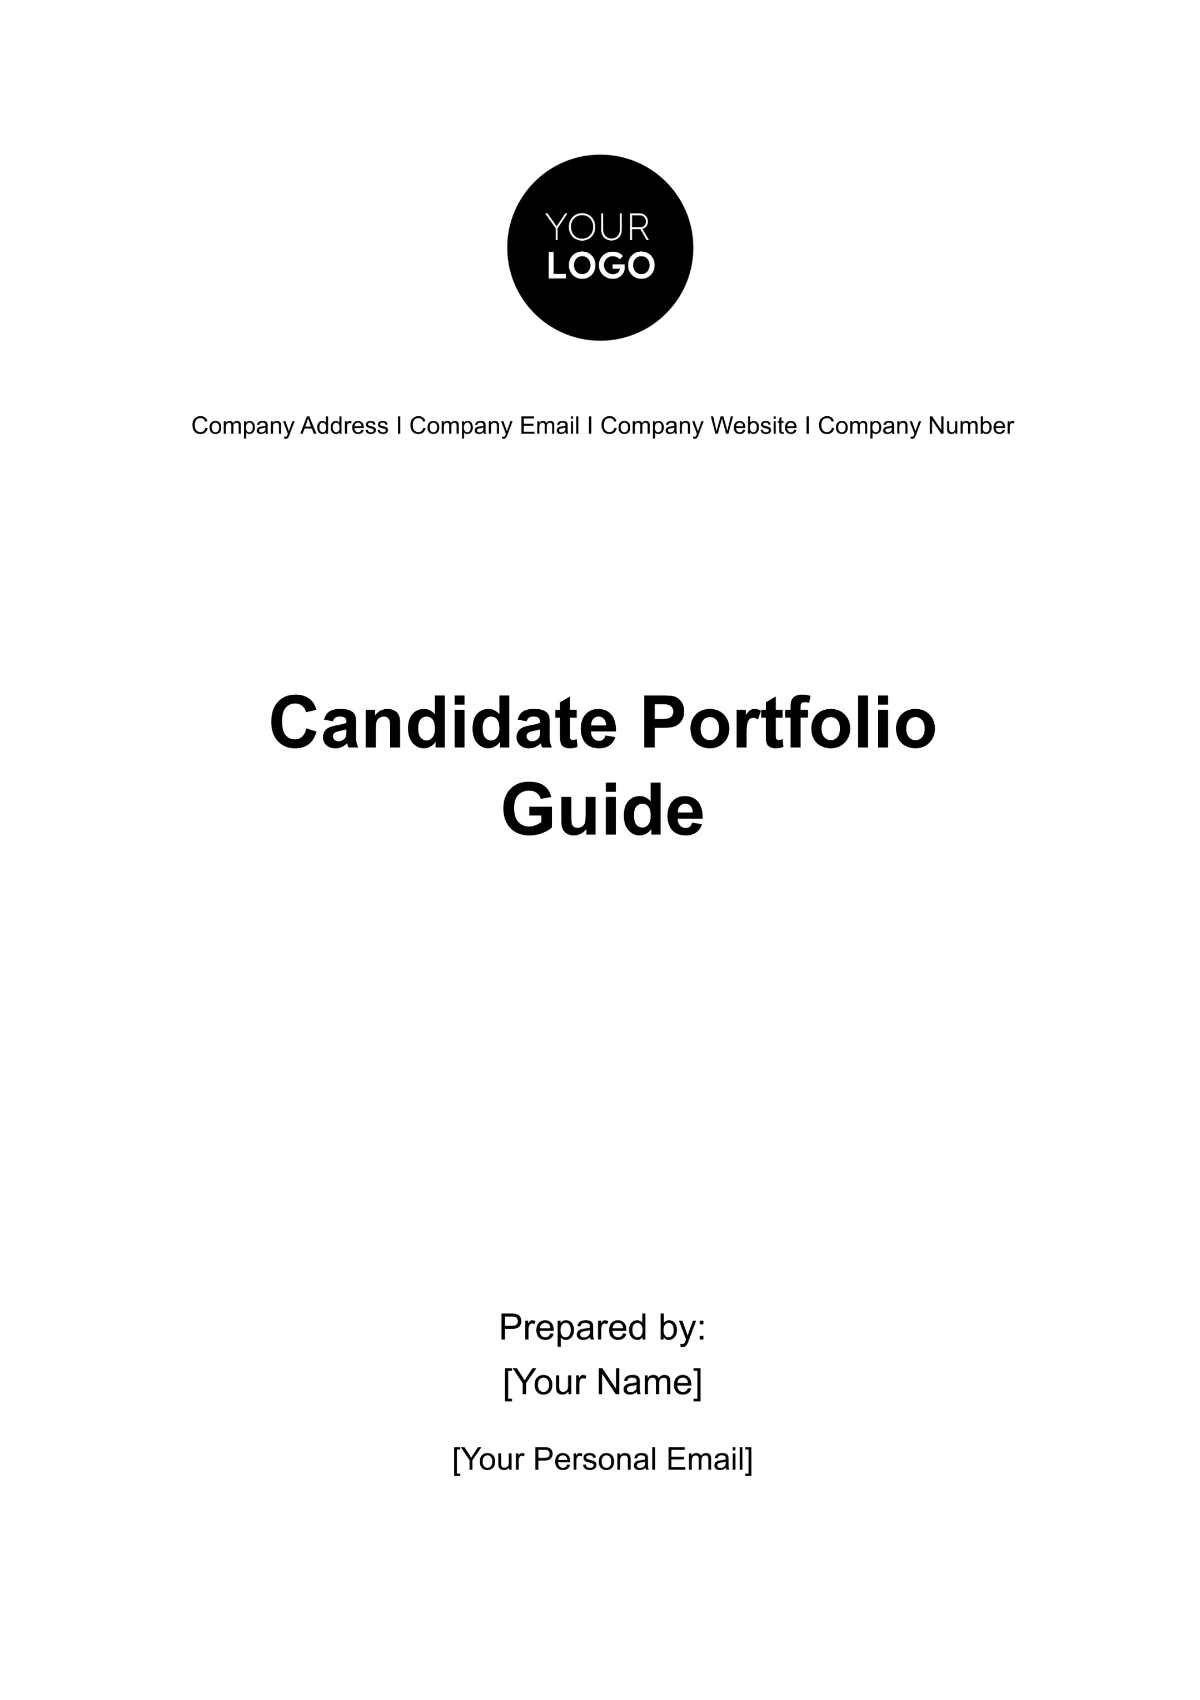 Free Candidate Portfolio Guide HR Template